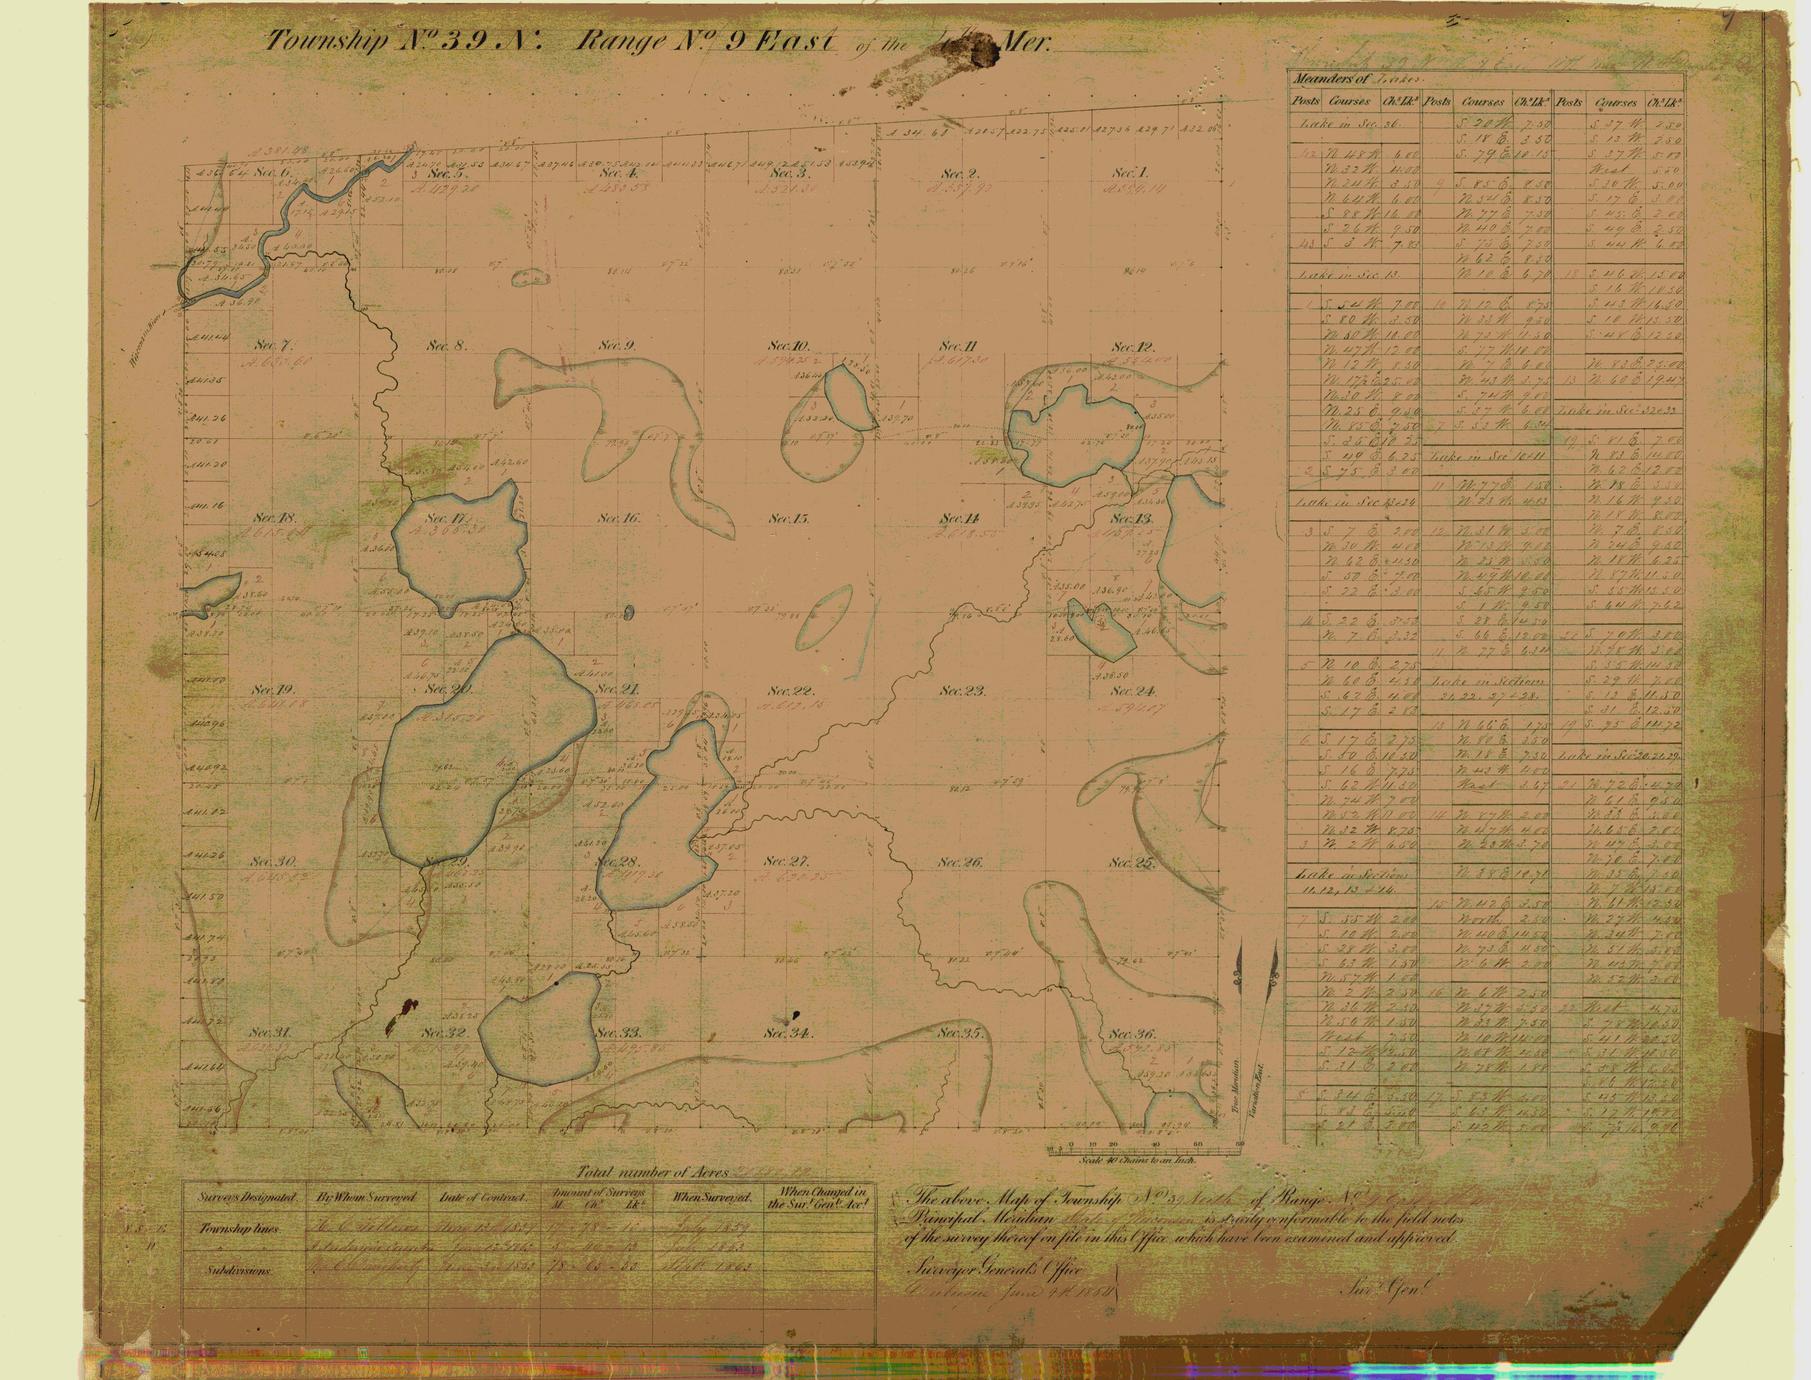 [Public Land Survey System map: Wisconsin Township 39 North, Range 09 East]